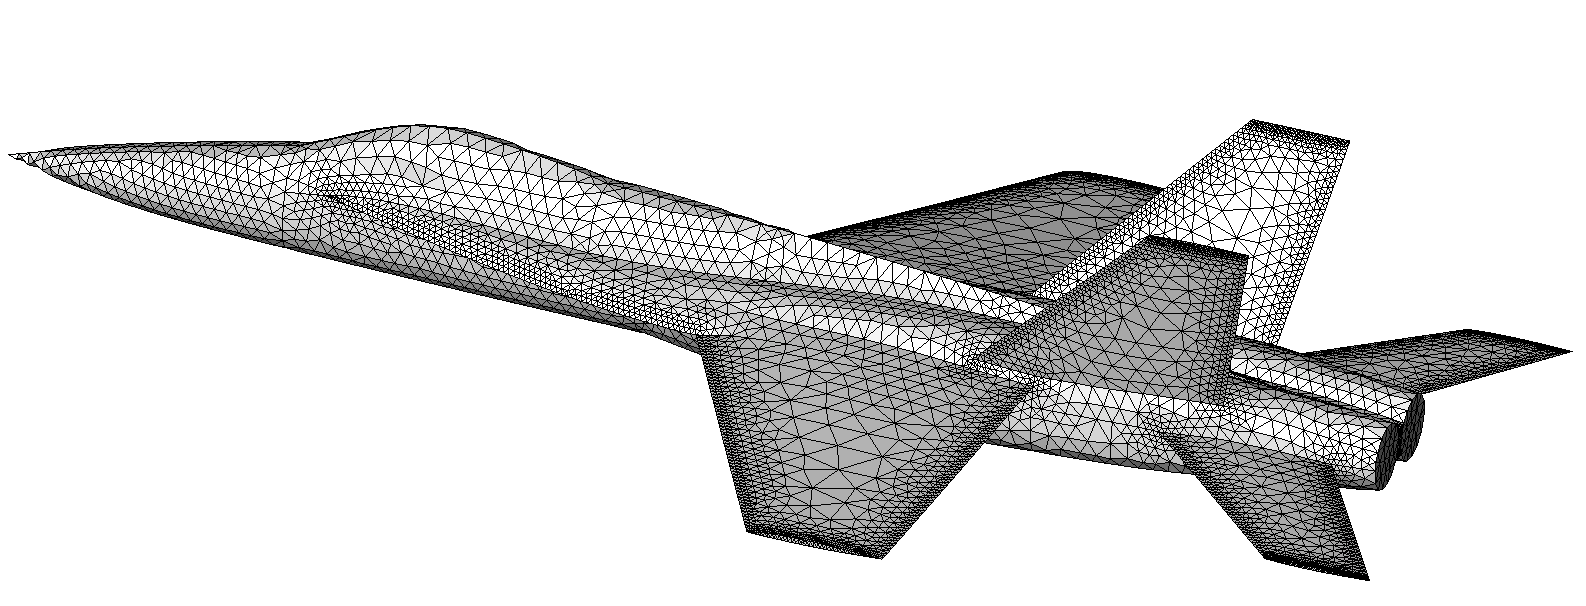 Finite element model of a jet